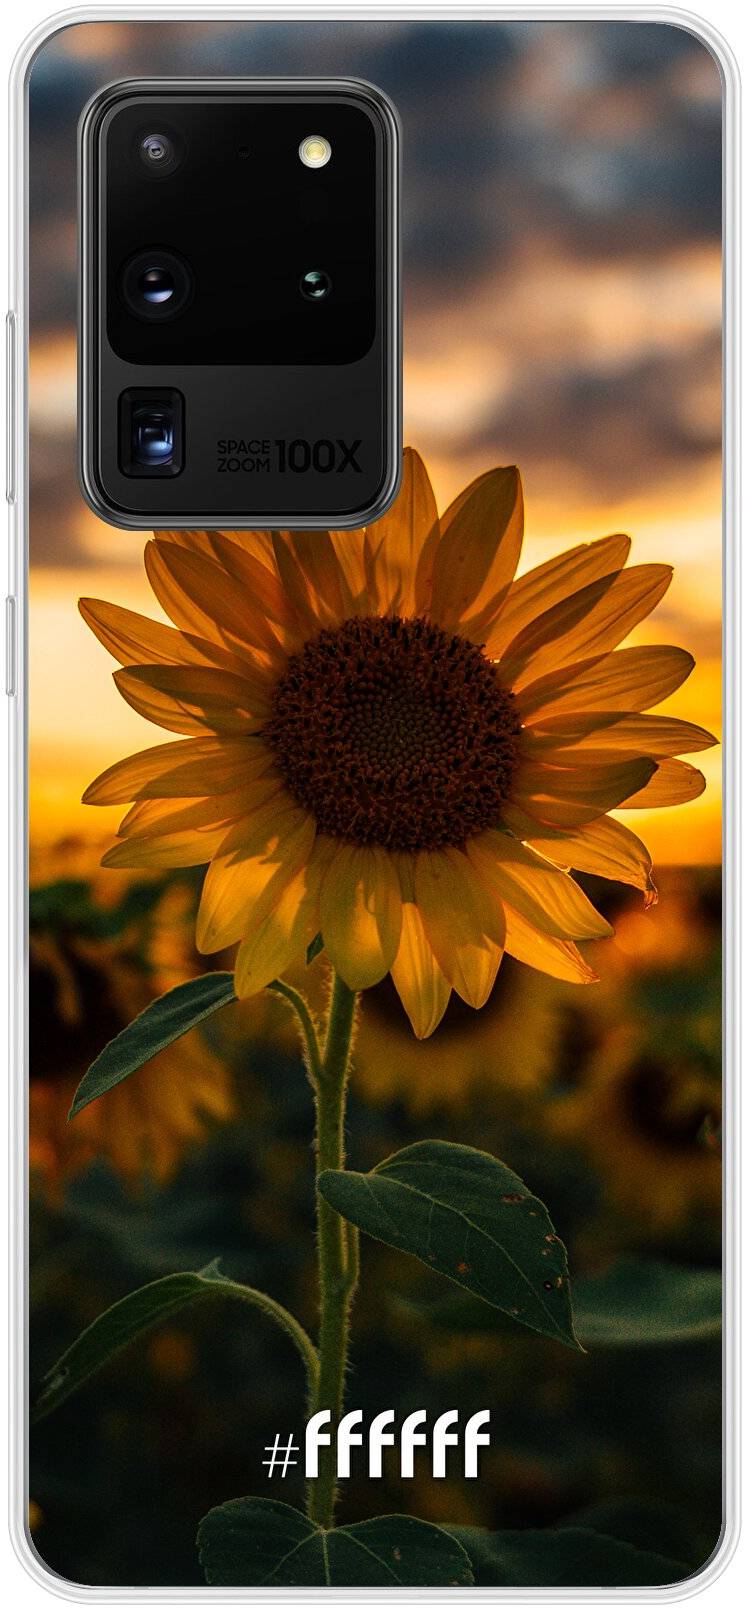 Sunset Sunflower Galaxy S20 Ultra